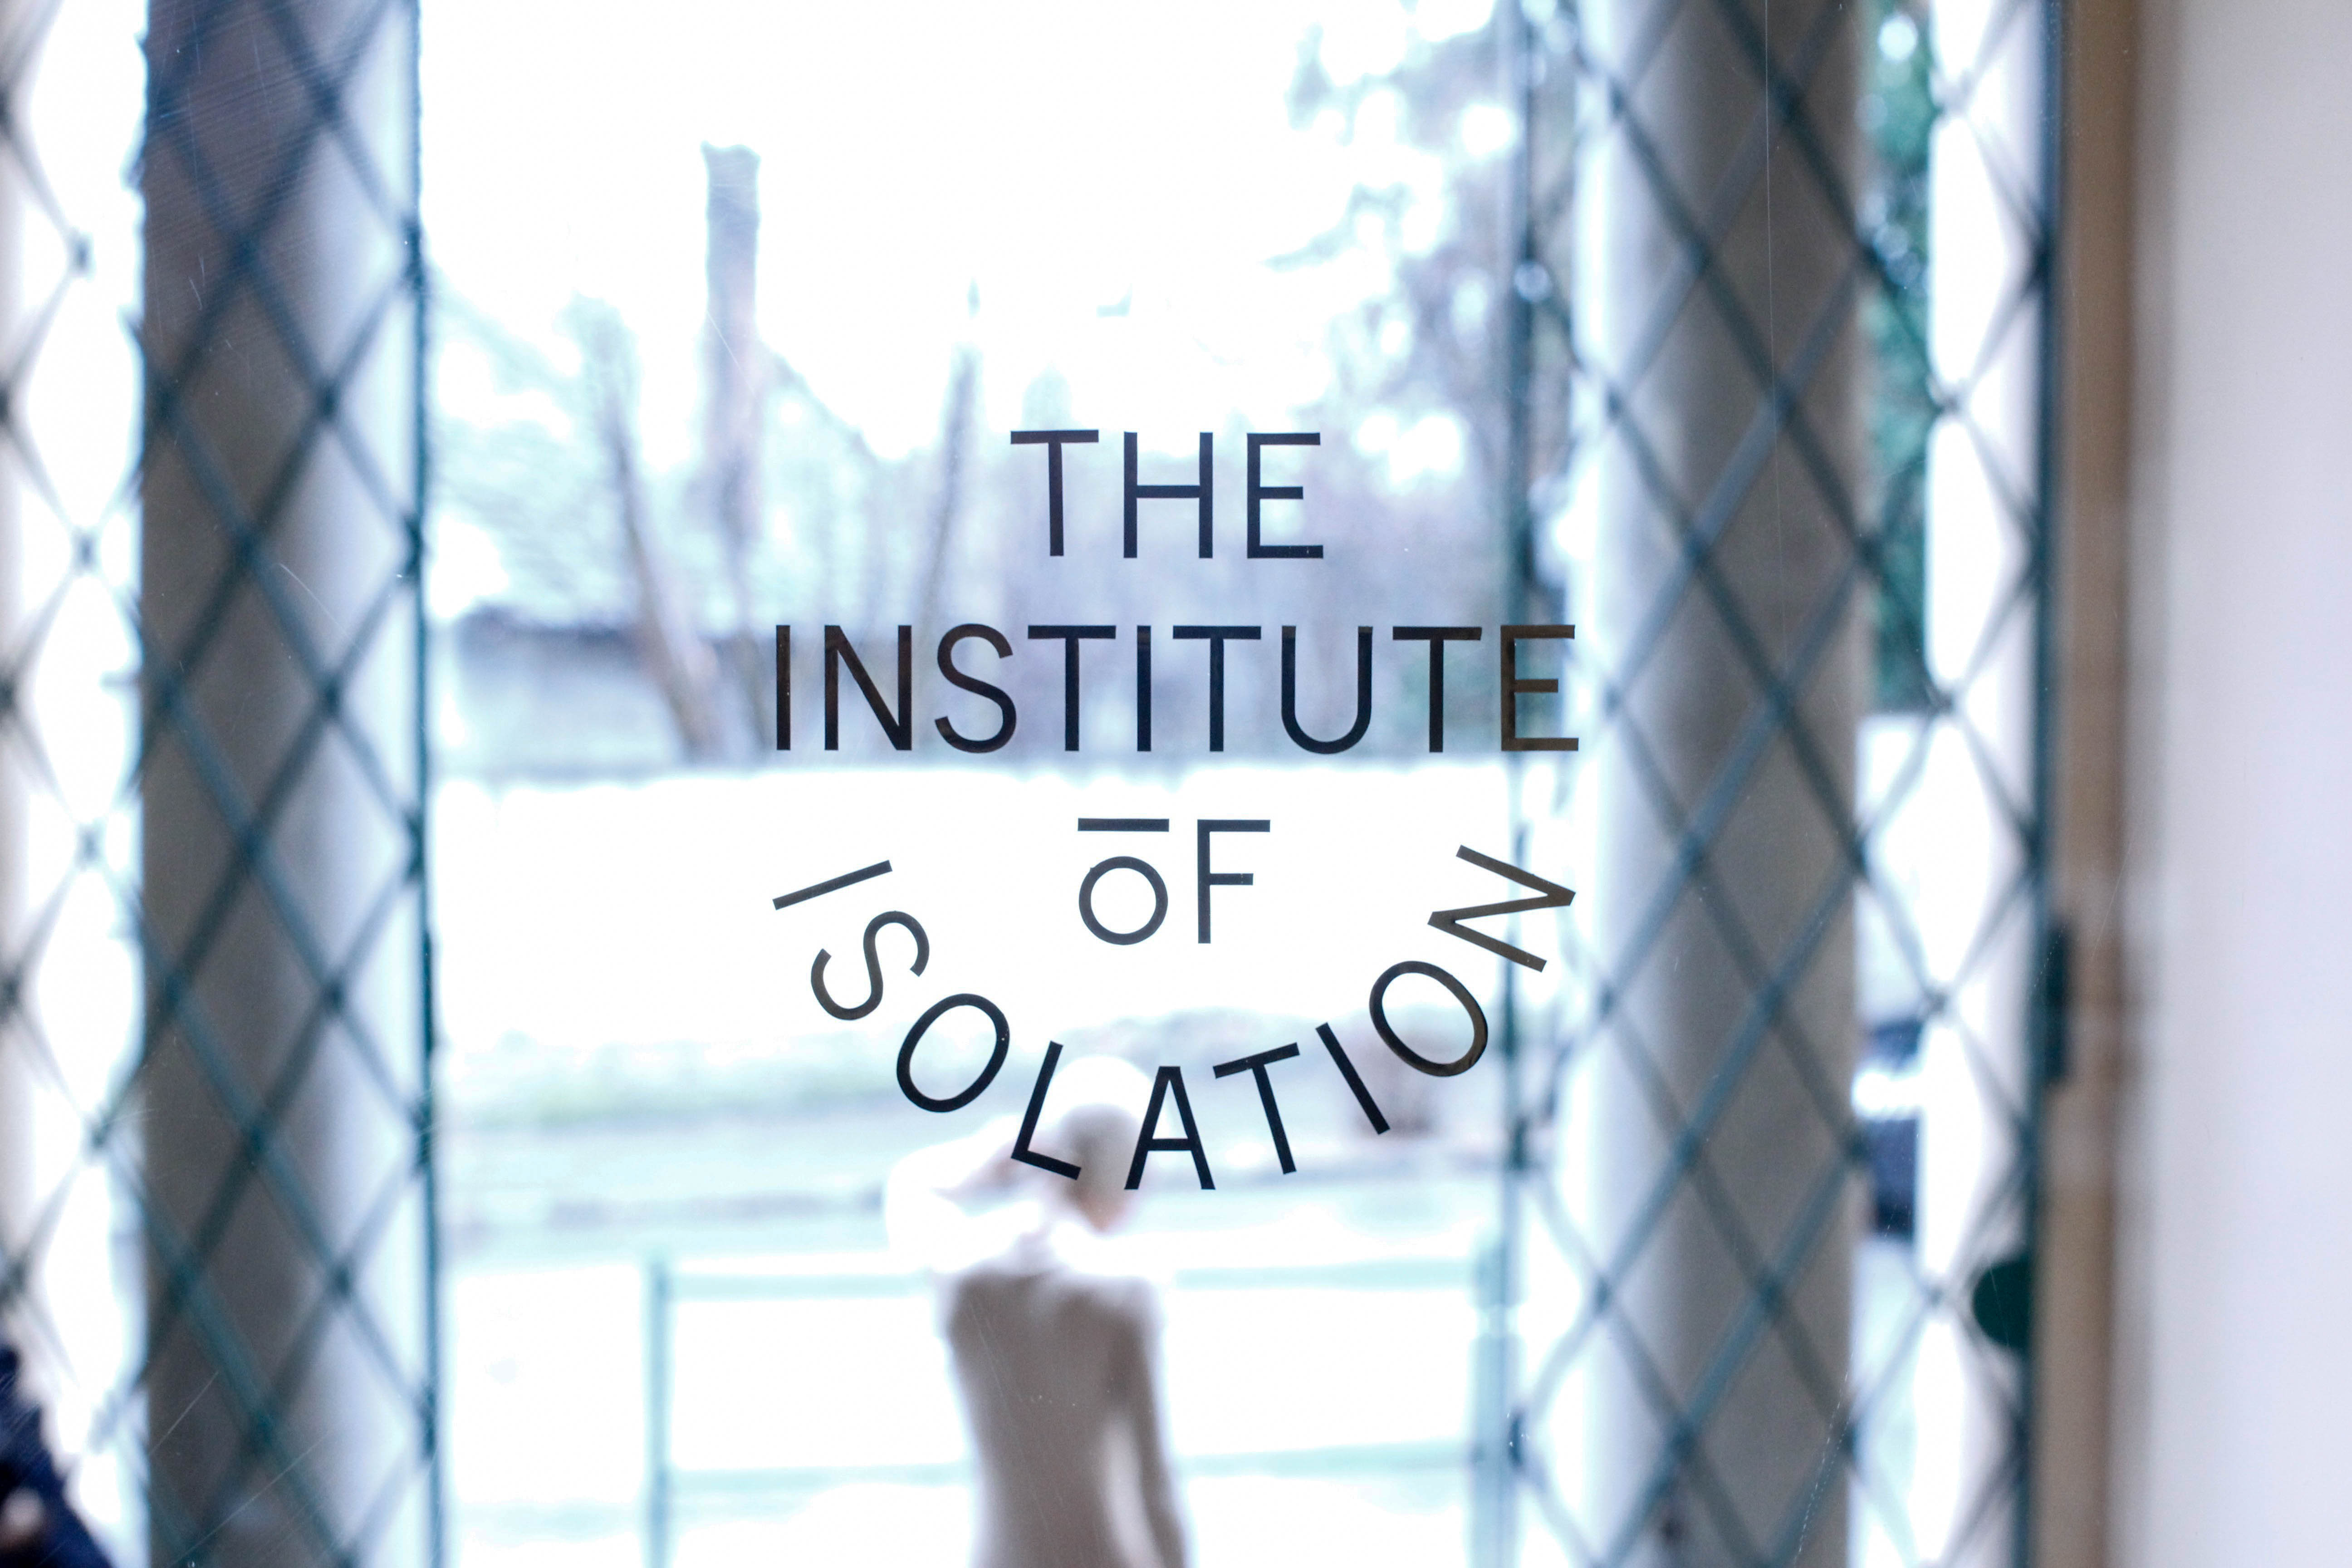 The Institute of Isolation